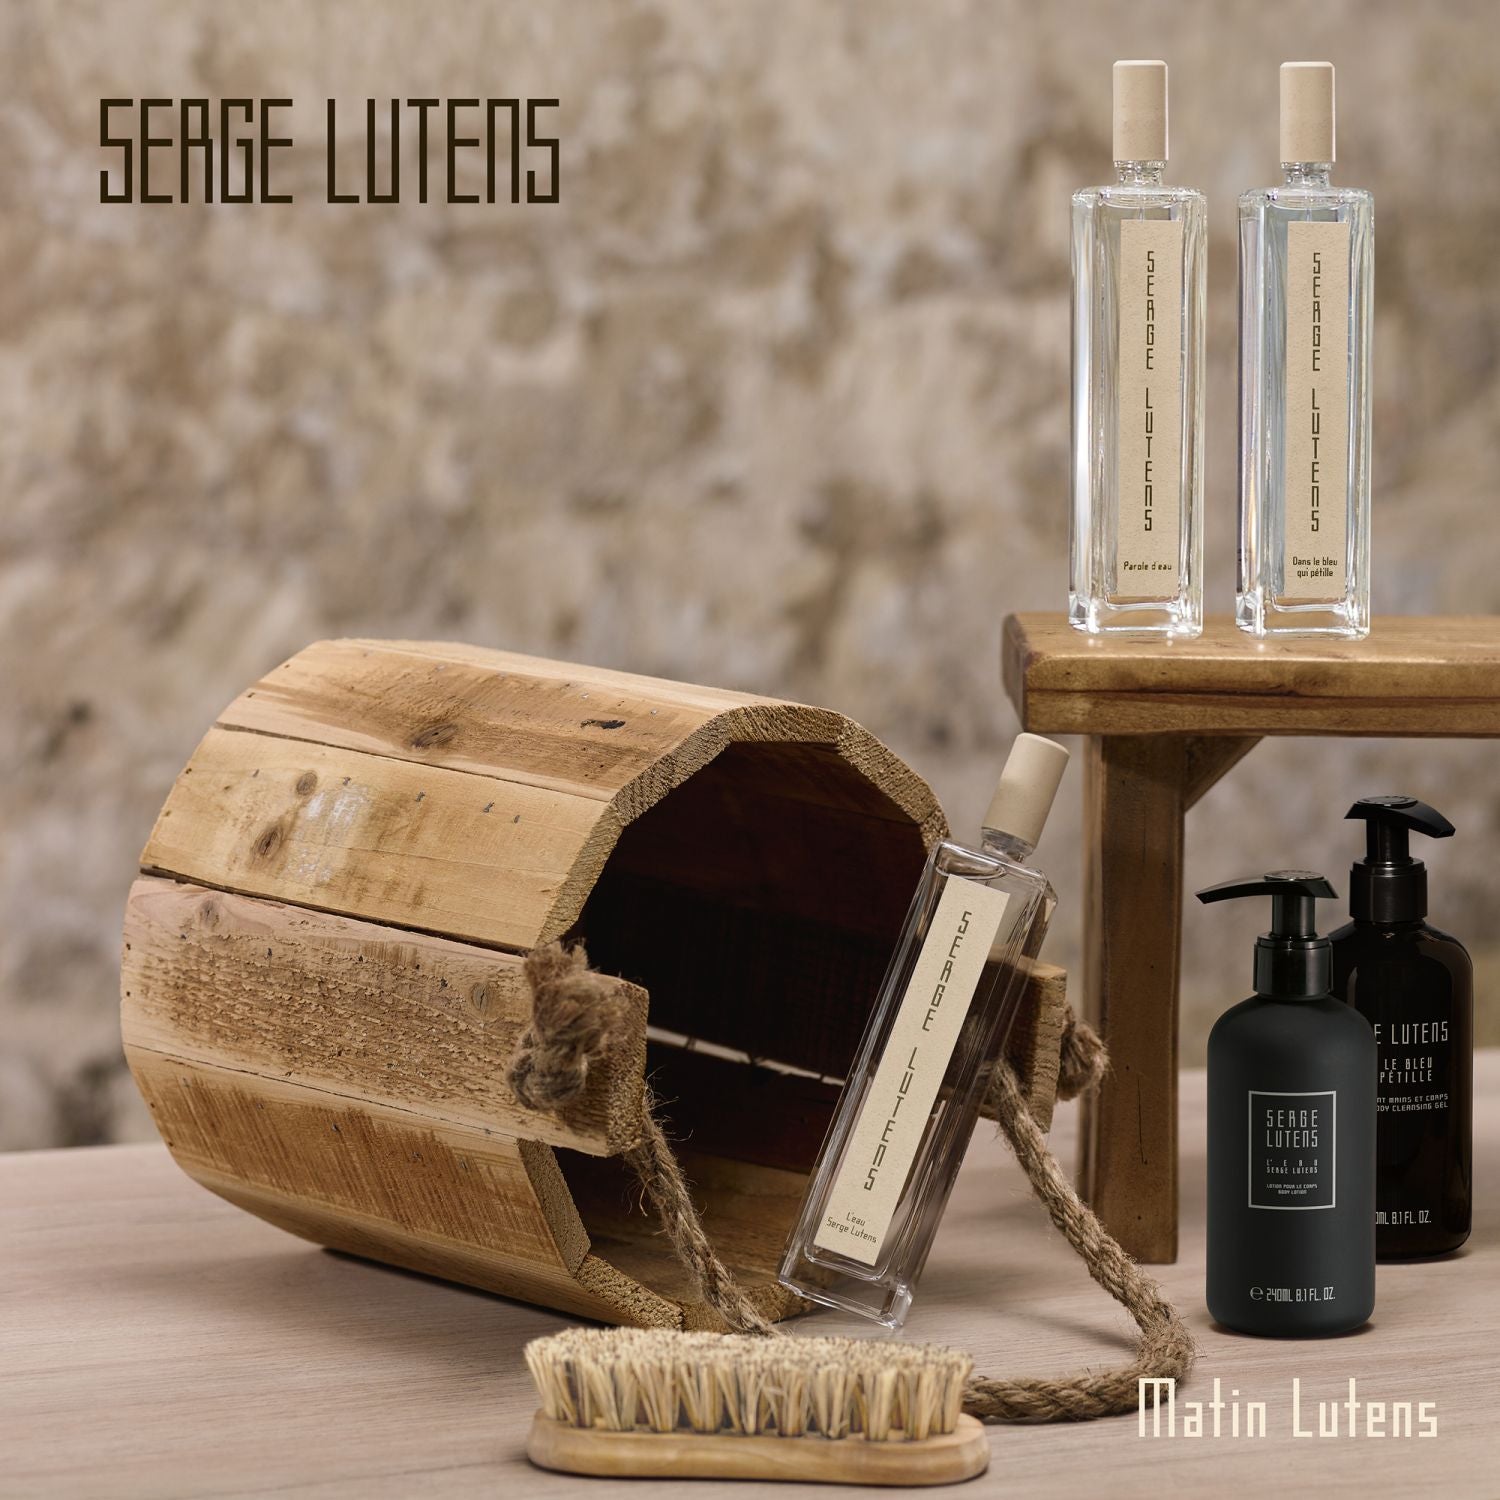 Serge Lutens Parole D'Eau Hand And Body Cleansing Gel | My Perfume Shop Australia